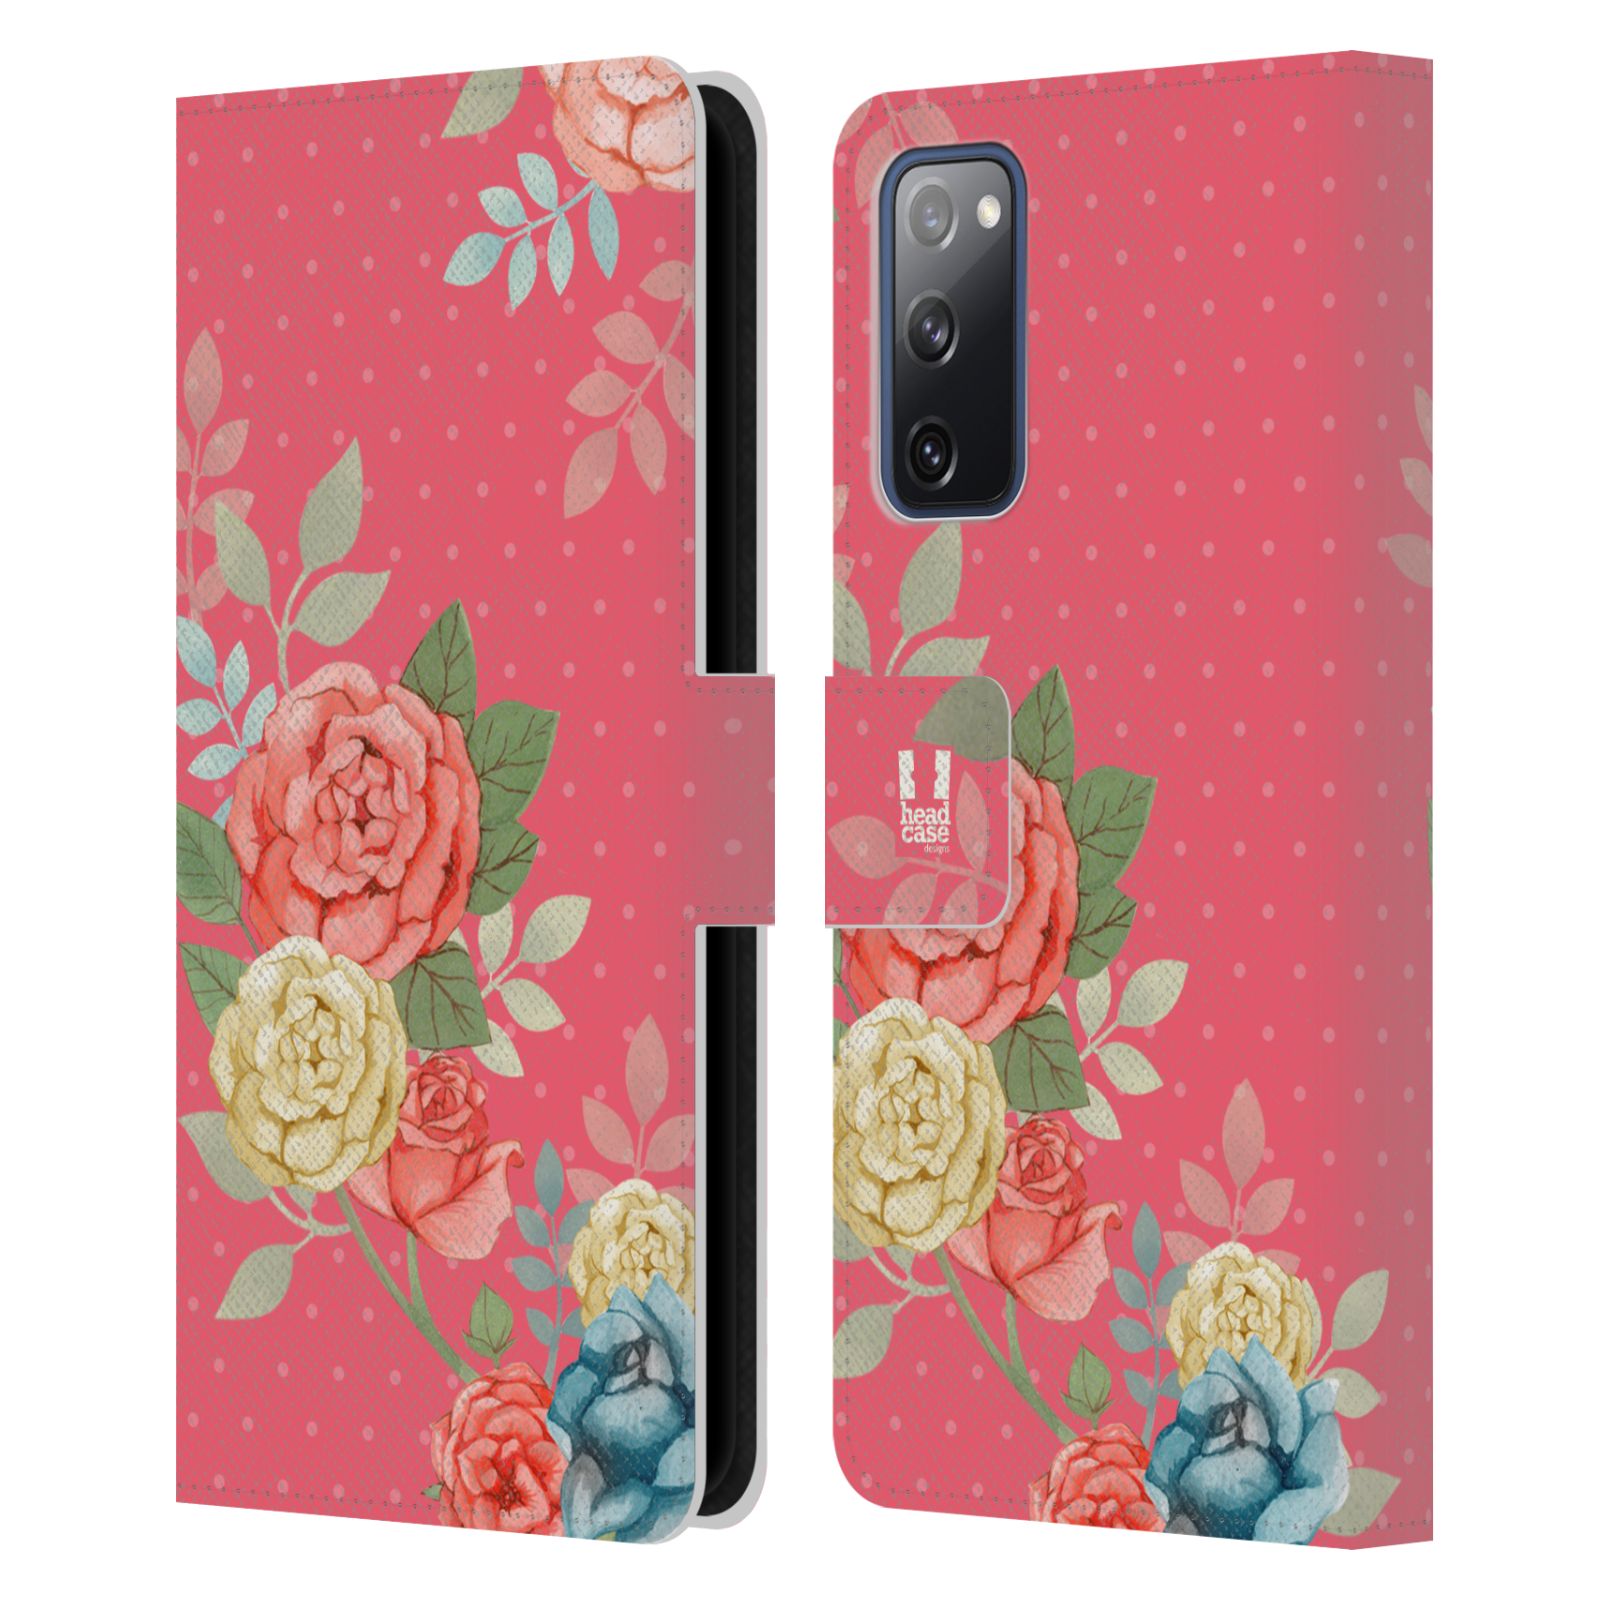 Pouzdro HEAD CASE na mobil Samsung Galaxy S20 FE / S20 FE 5G romantické květy růžová